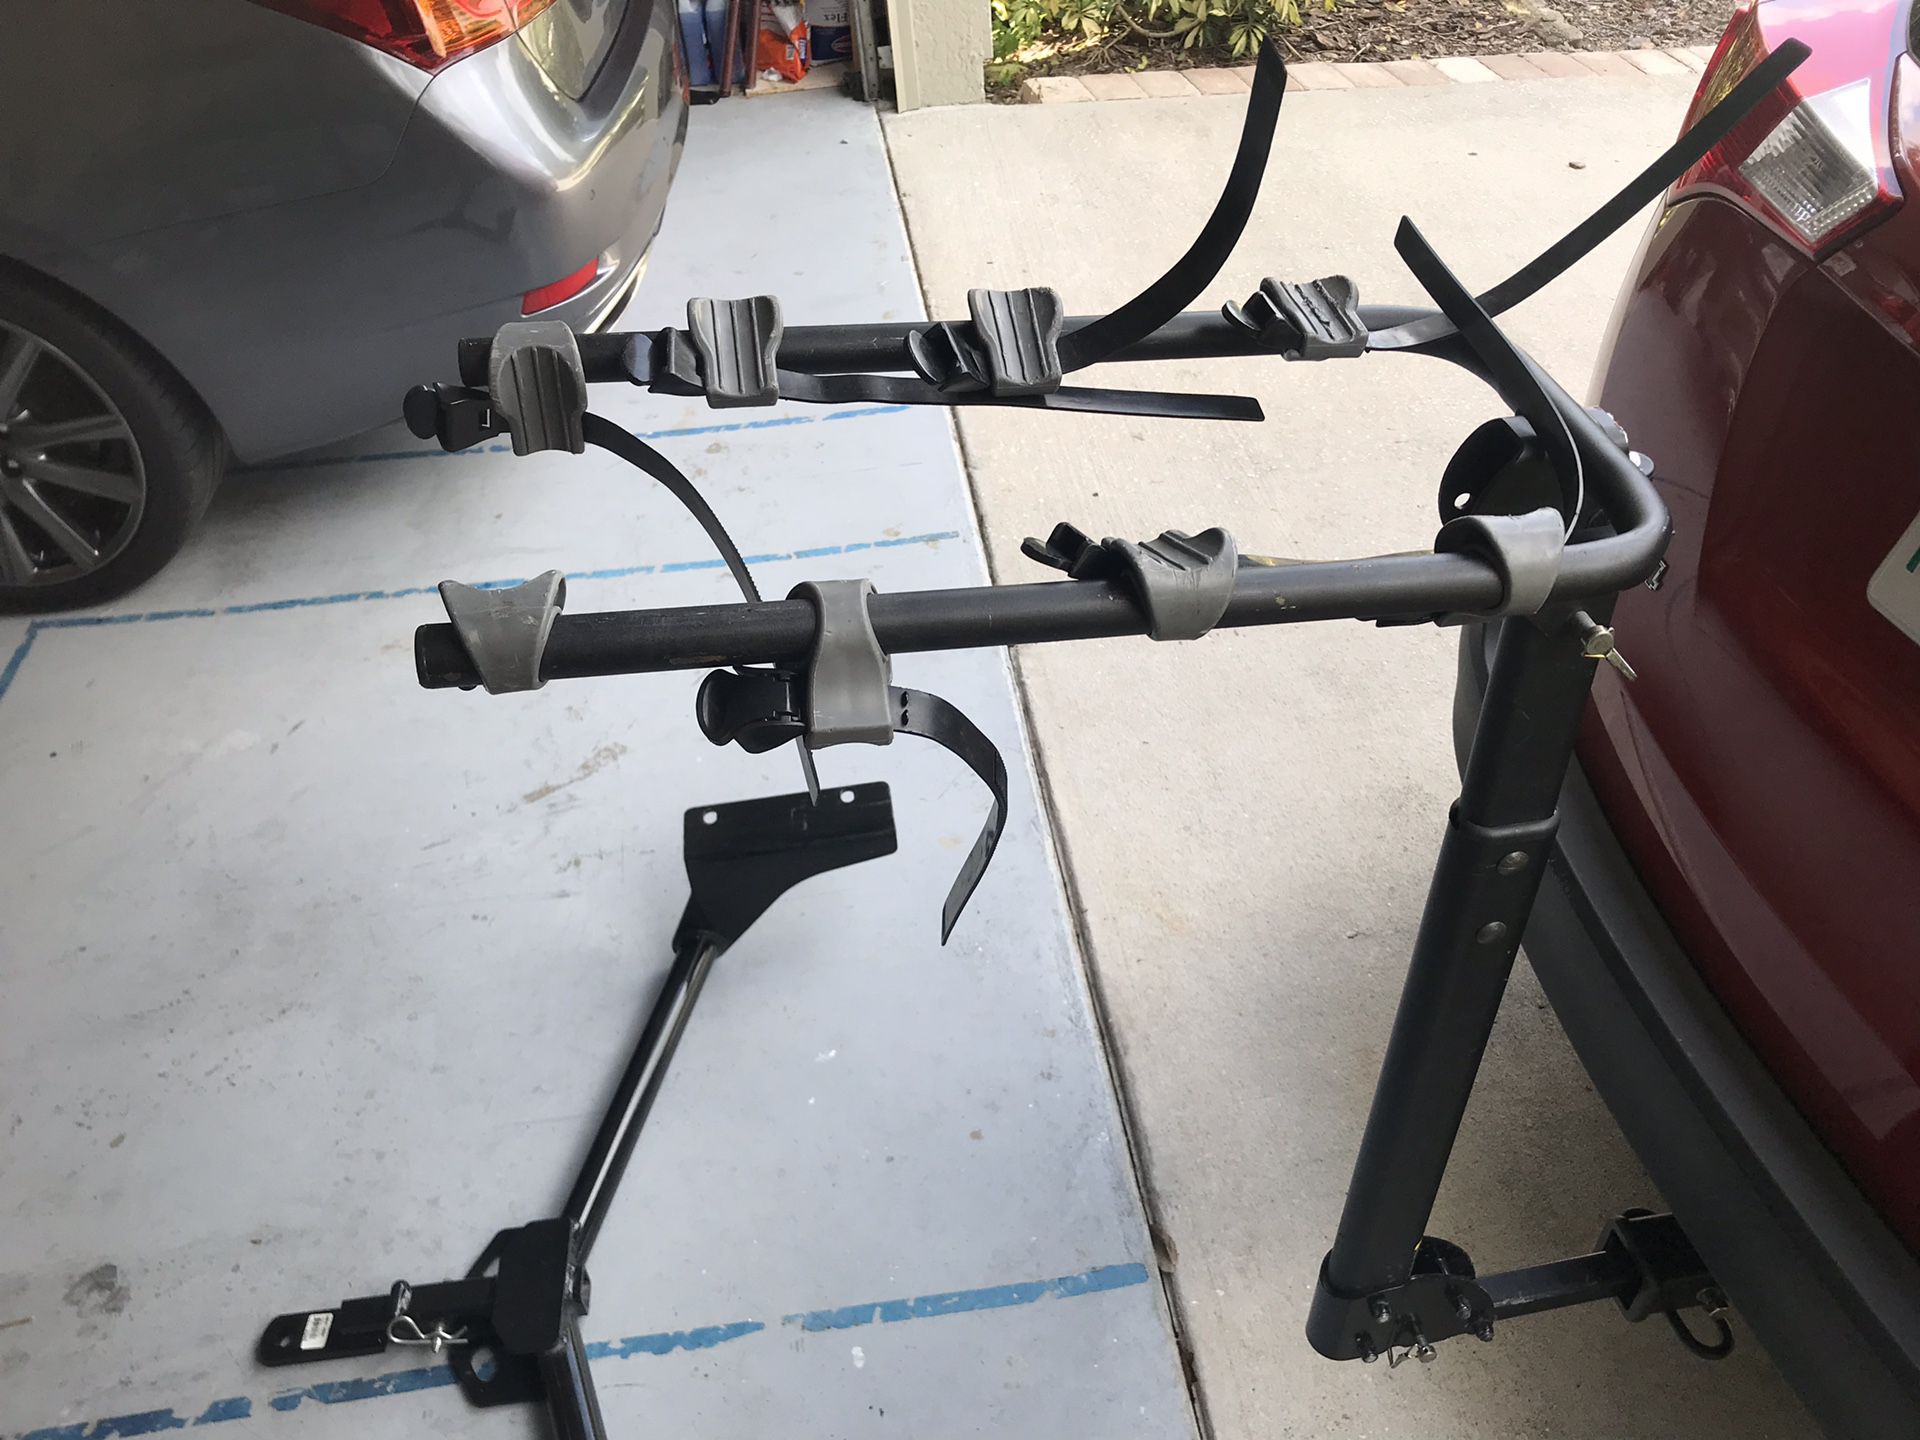 4 bike bike rack, tilts, folds down